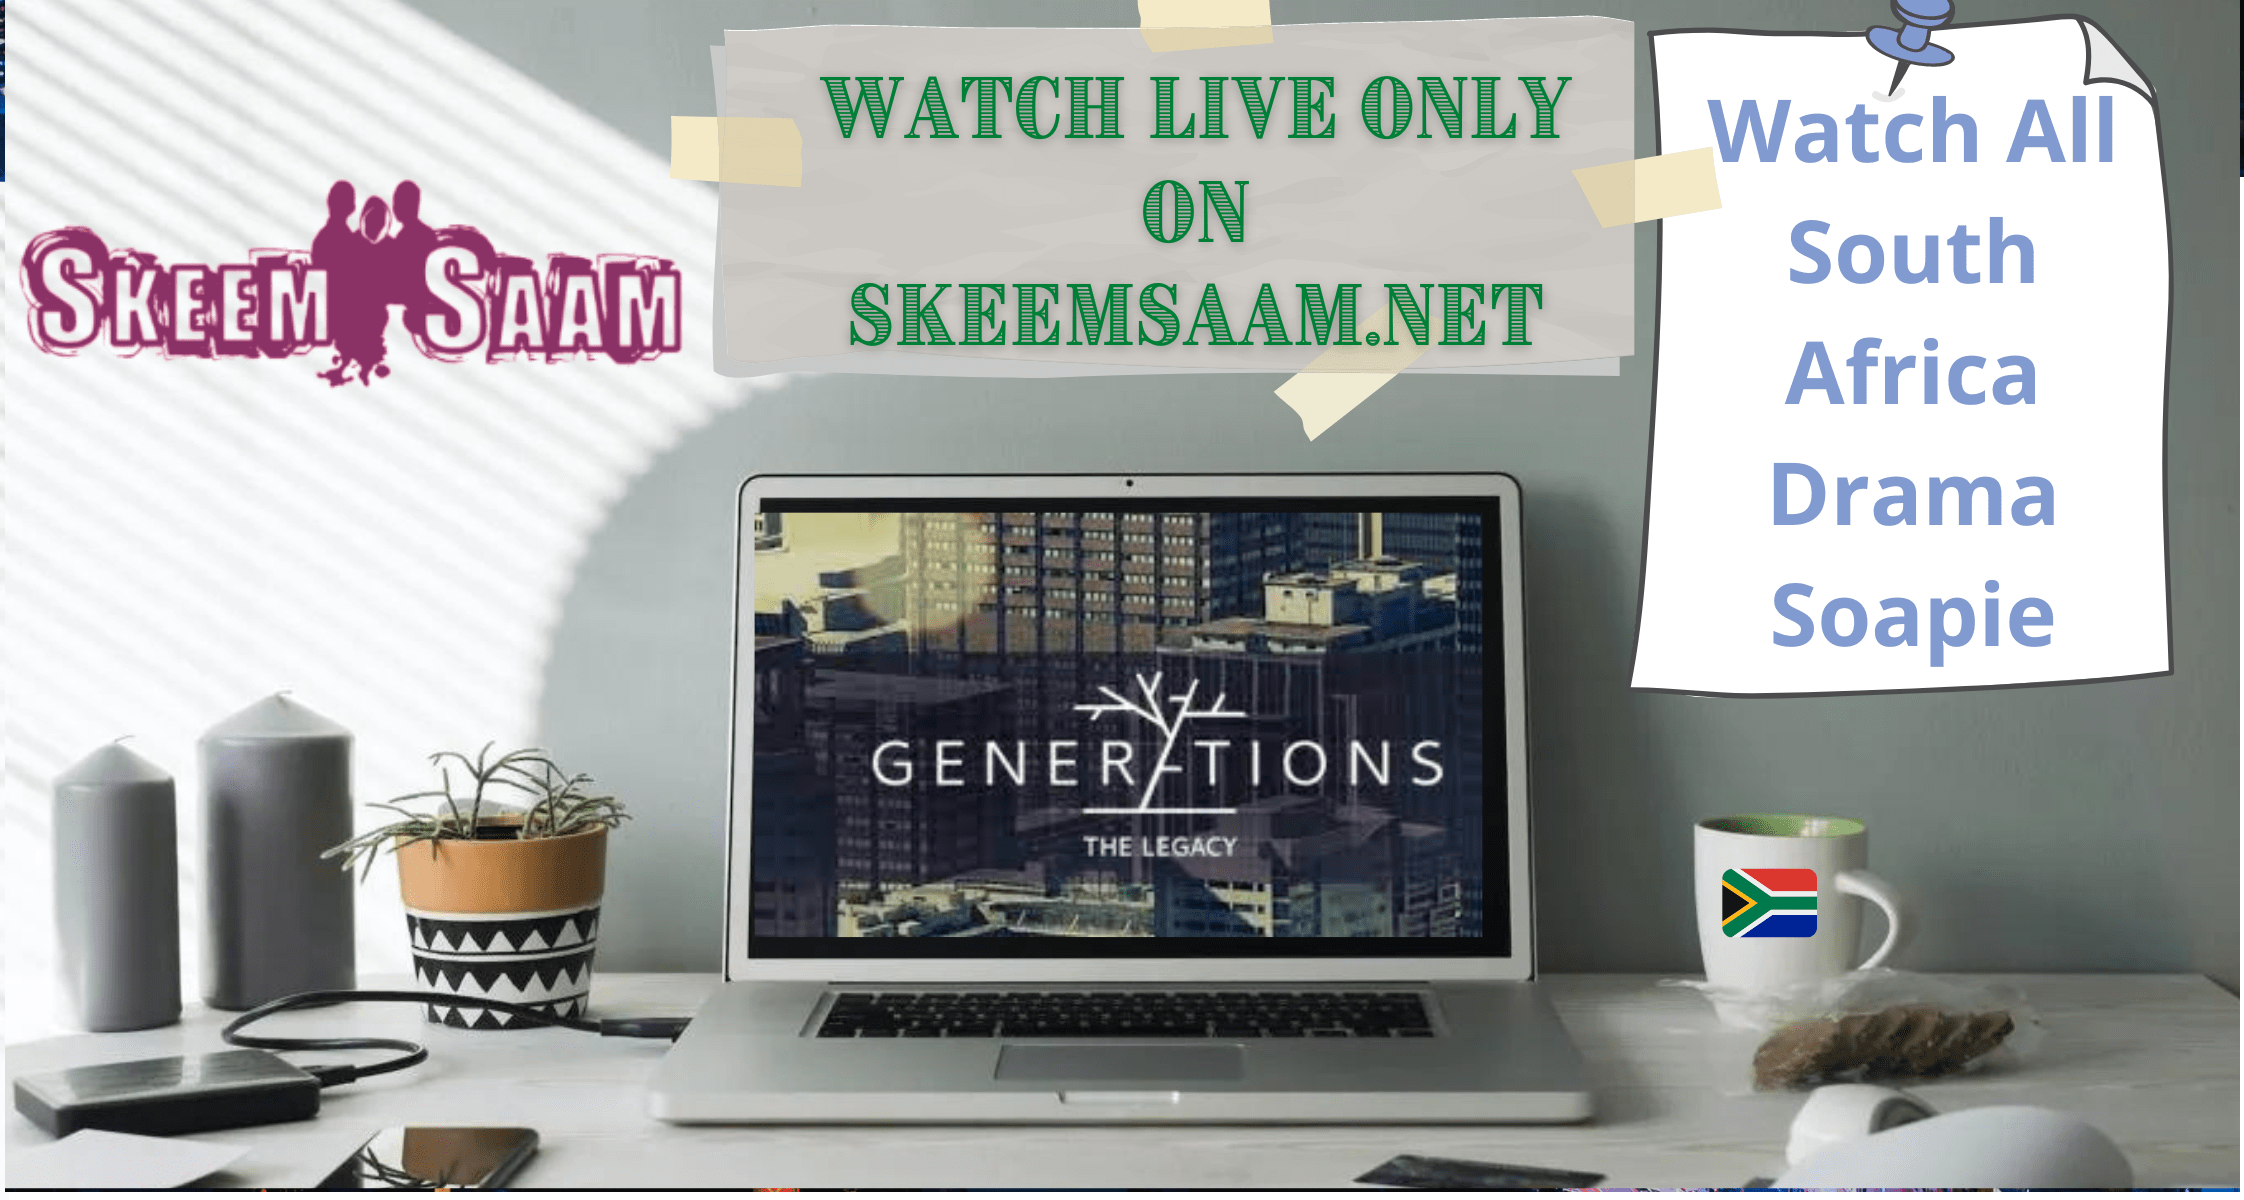 Generation the legacy episode online viu